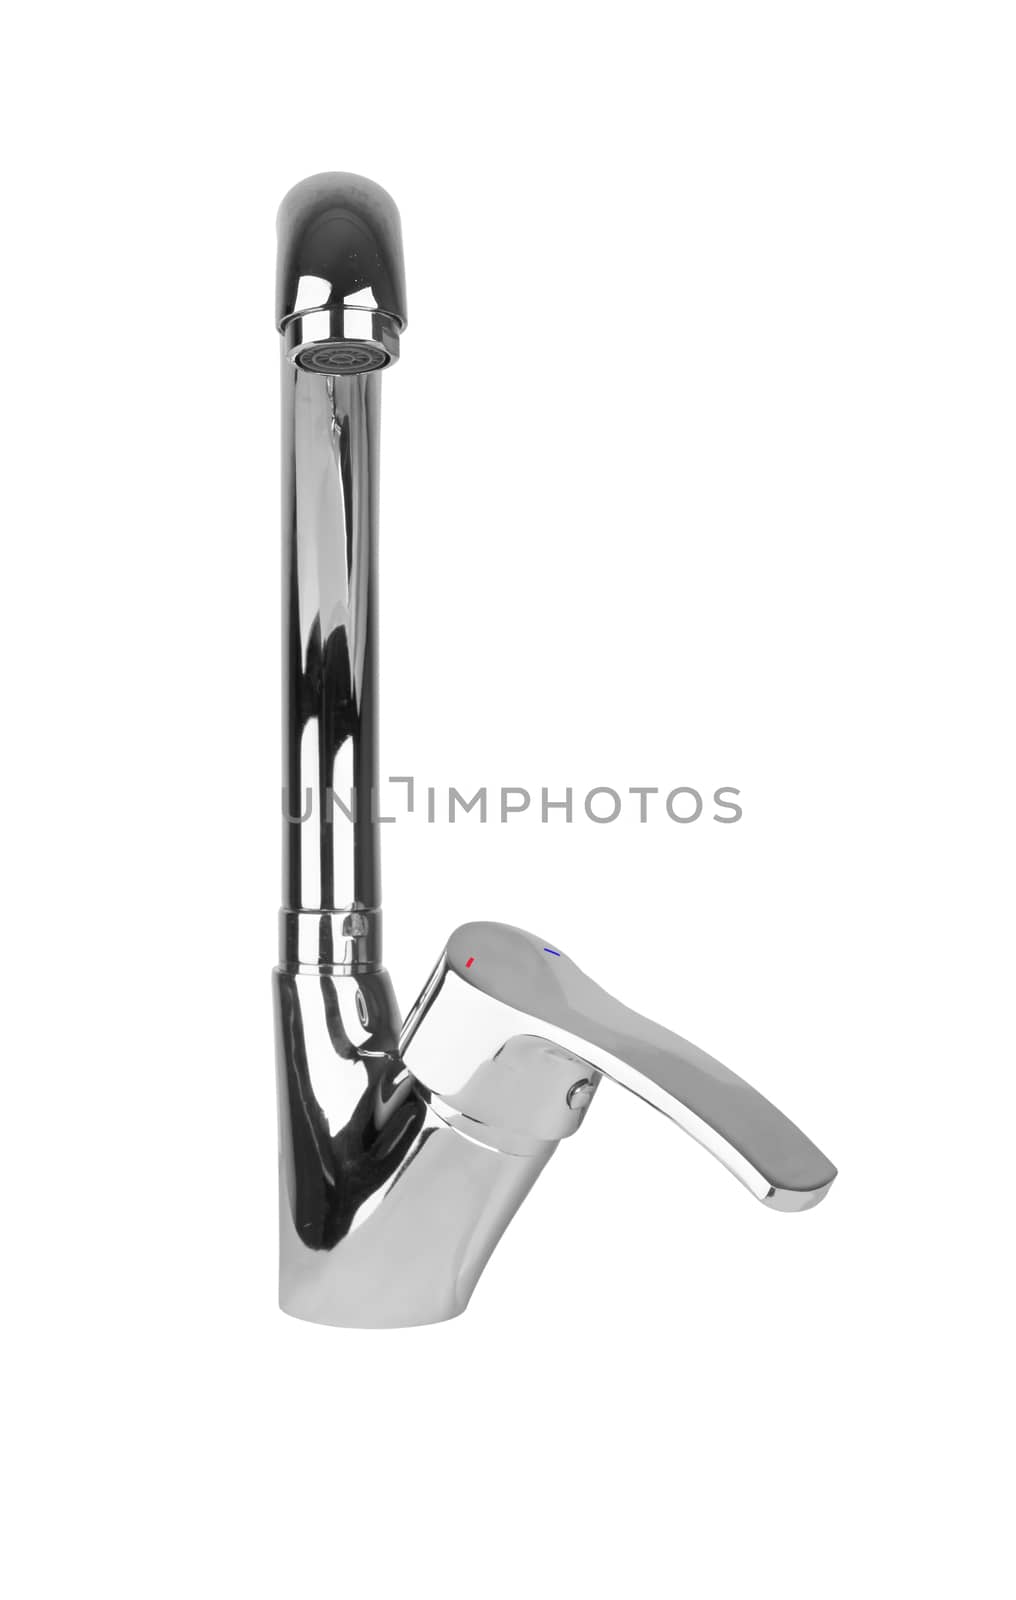 Stainless steel tap by pioneer111